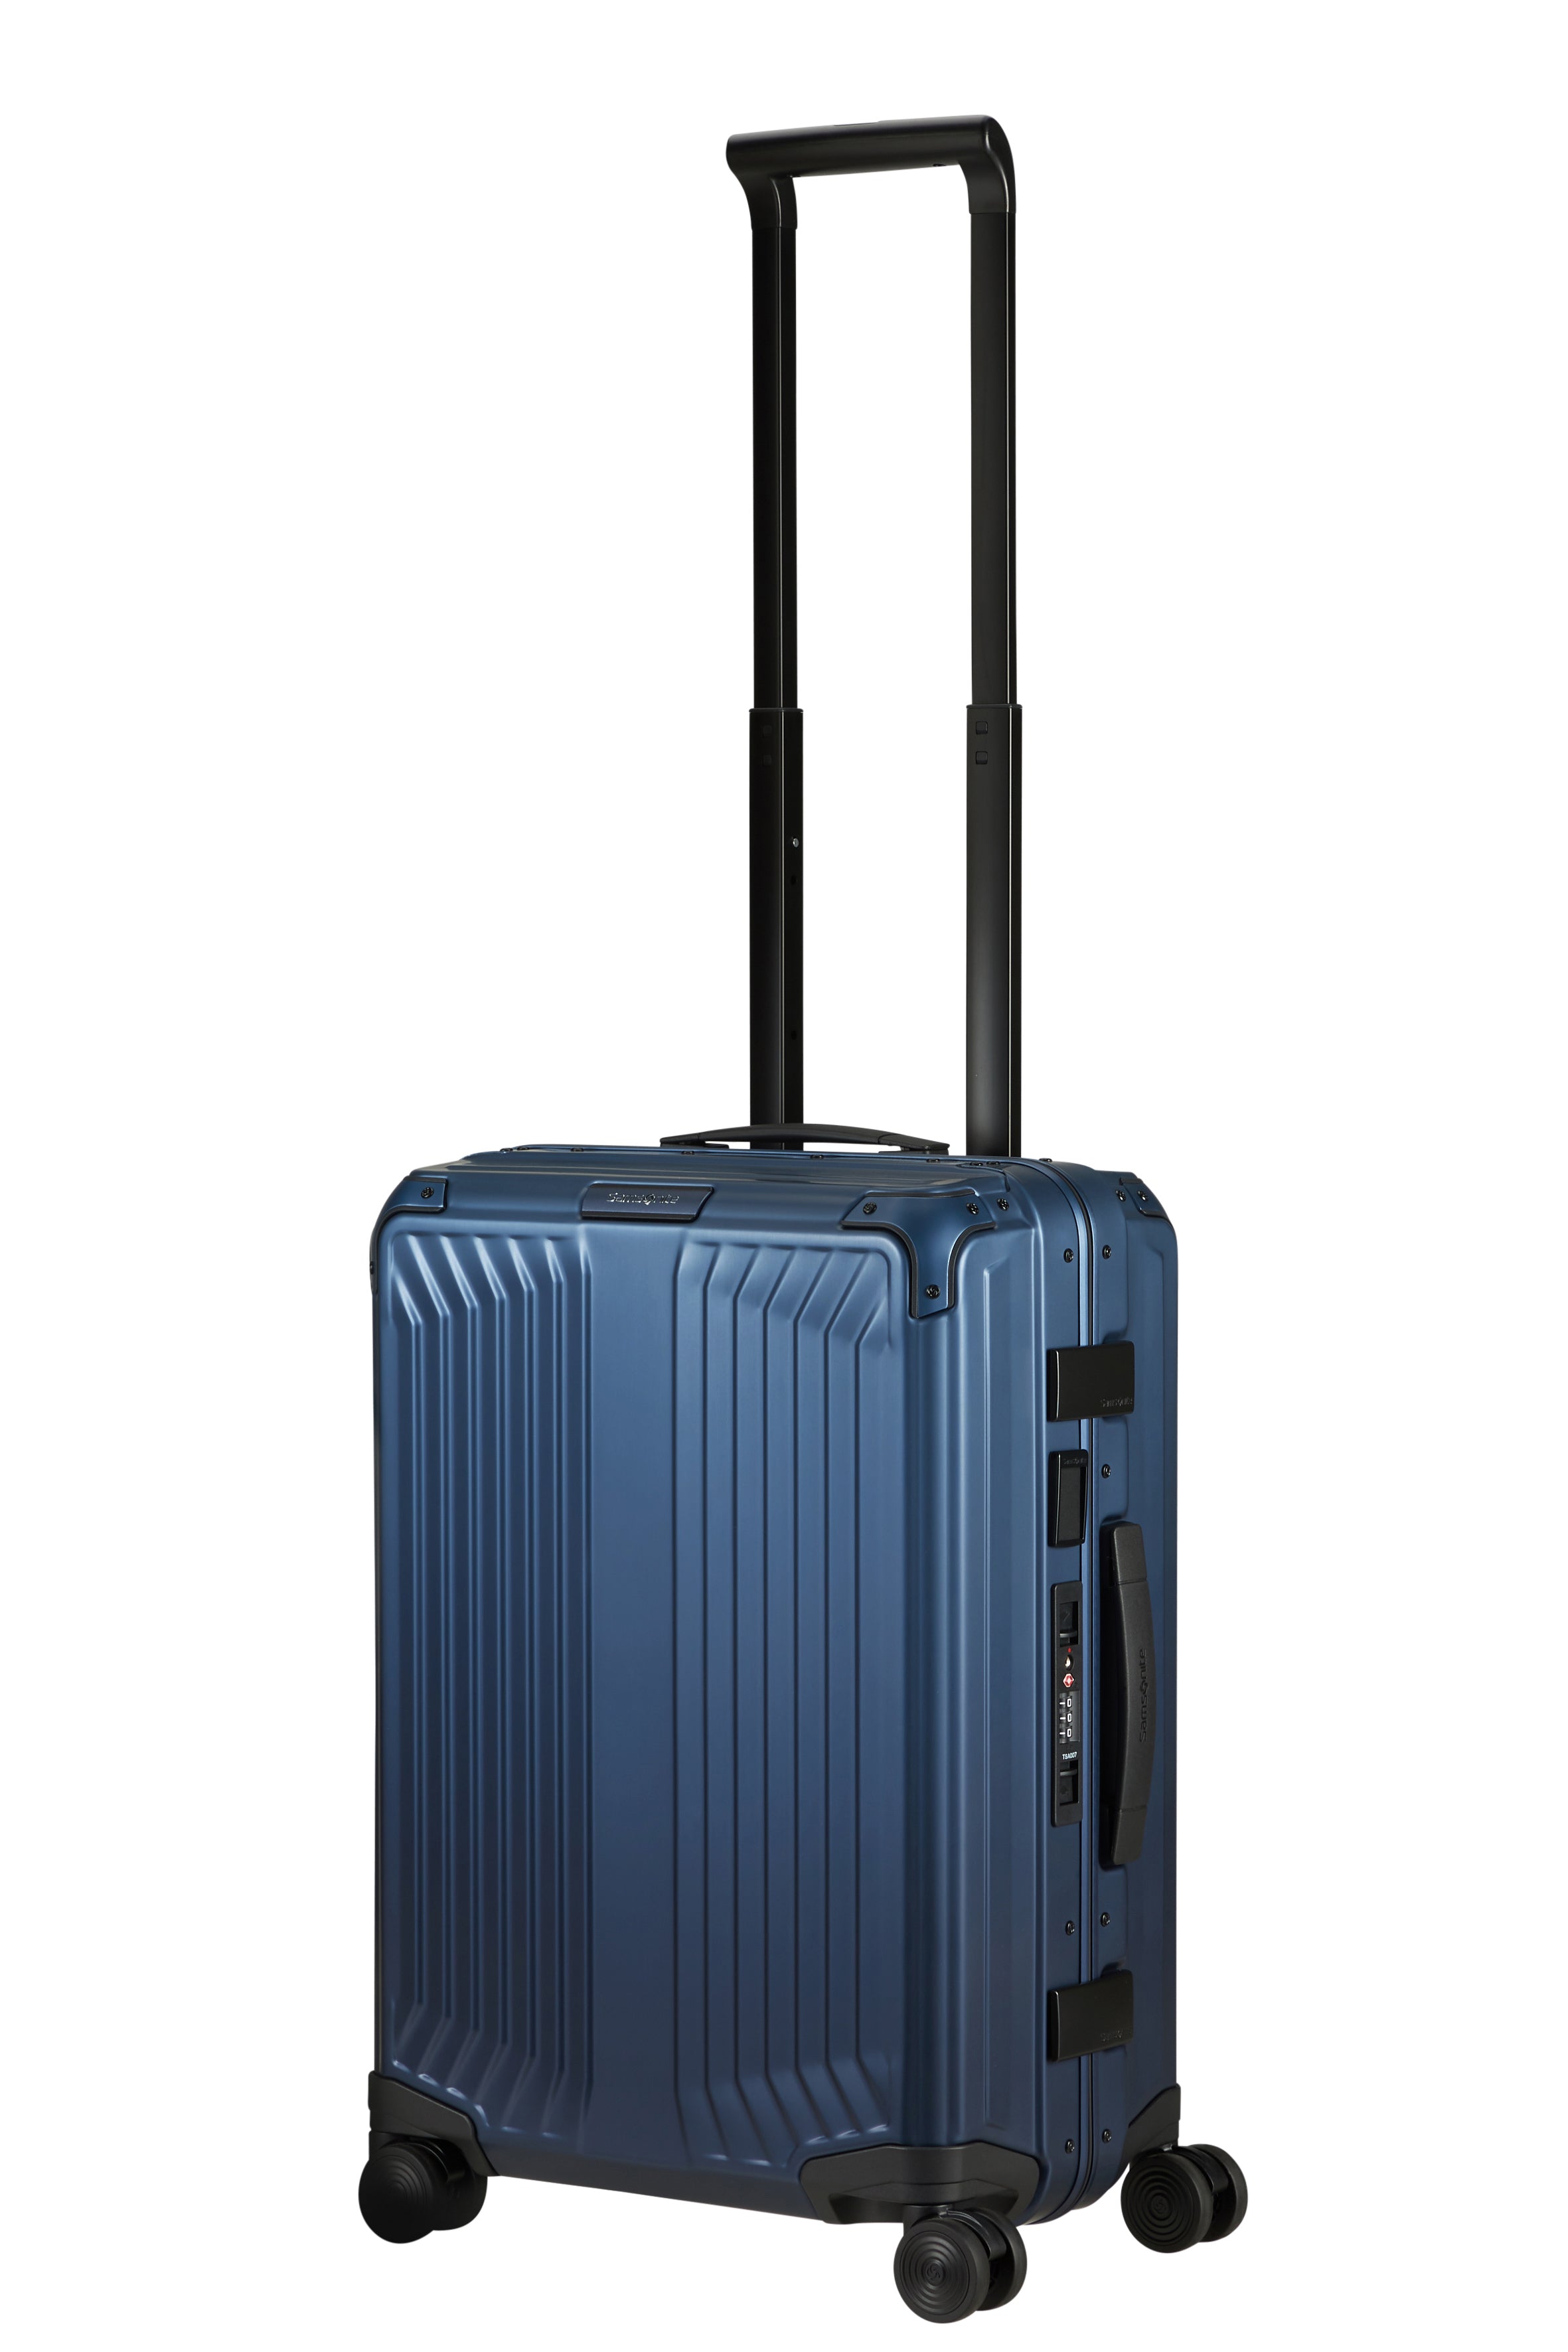 Samsonite - Lite Box ALU 55cm Small 4 Wheel Hard Suitcase - Gradient Midnight-2